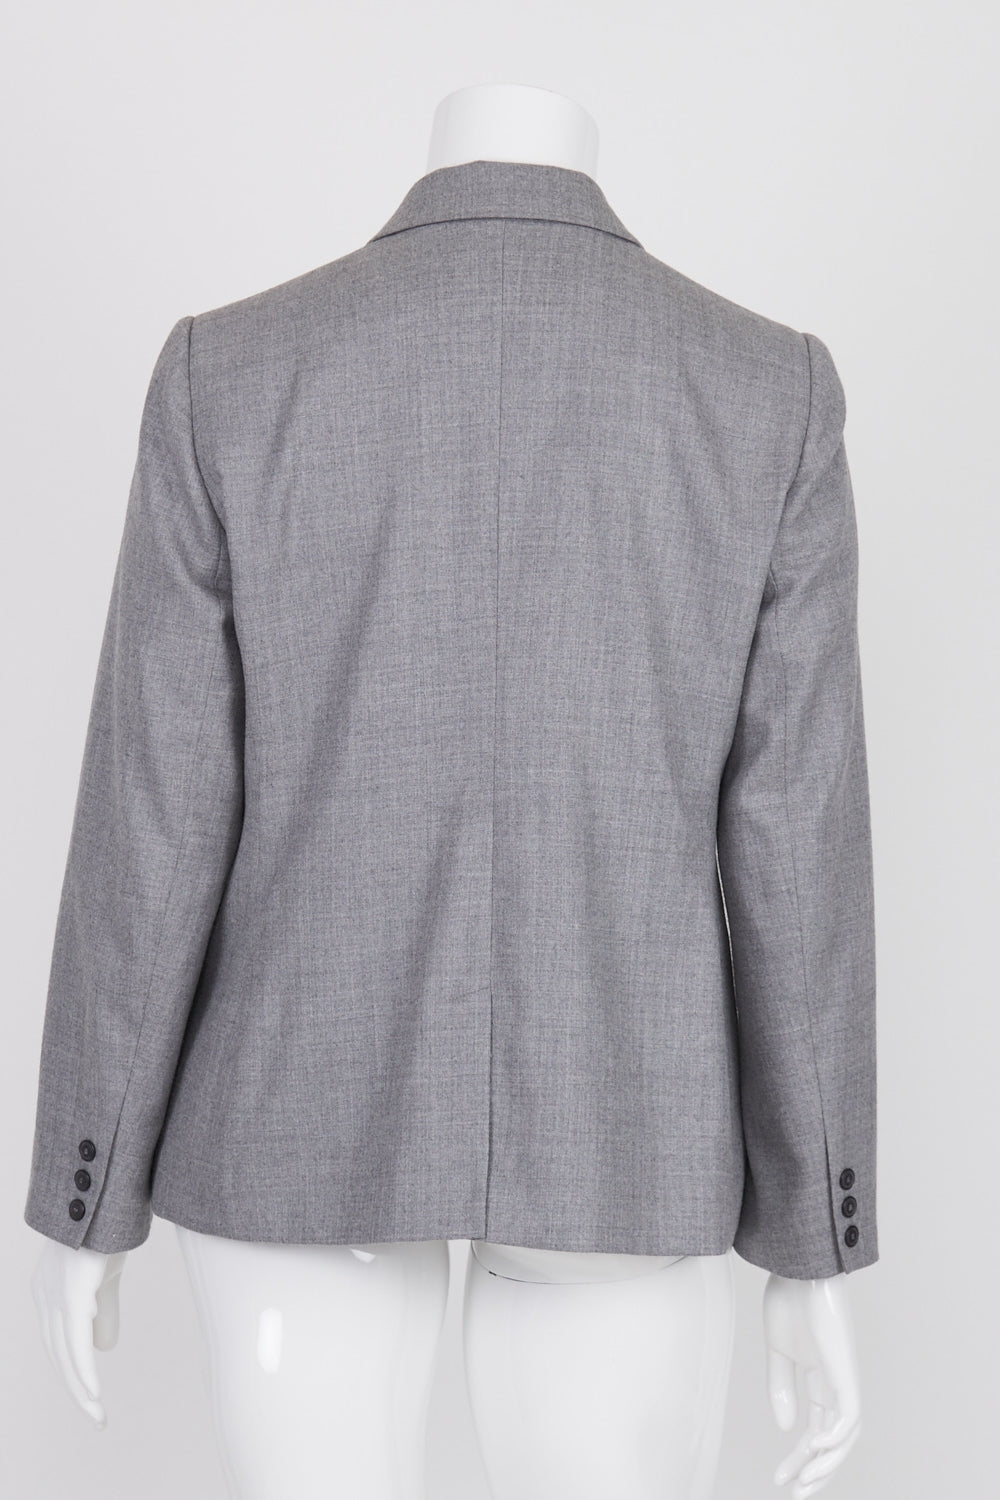 Perri Cutten Grey 100% Wool Blazer 18